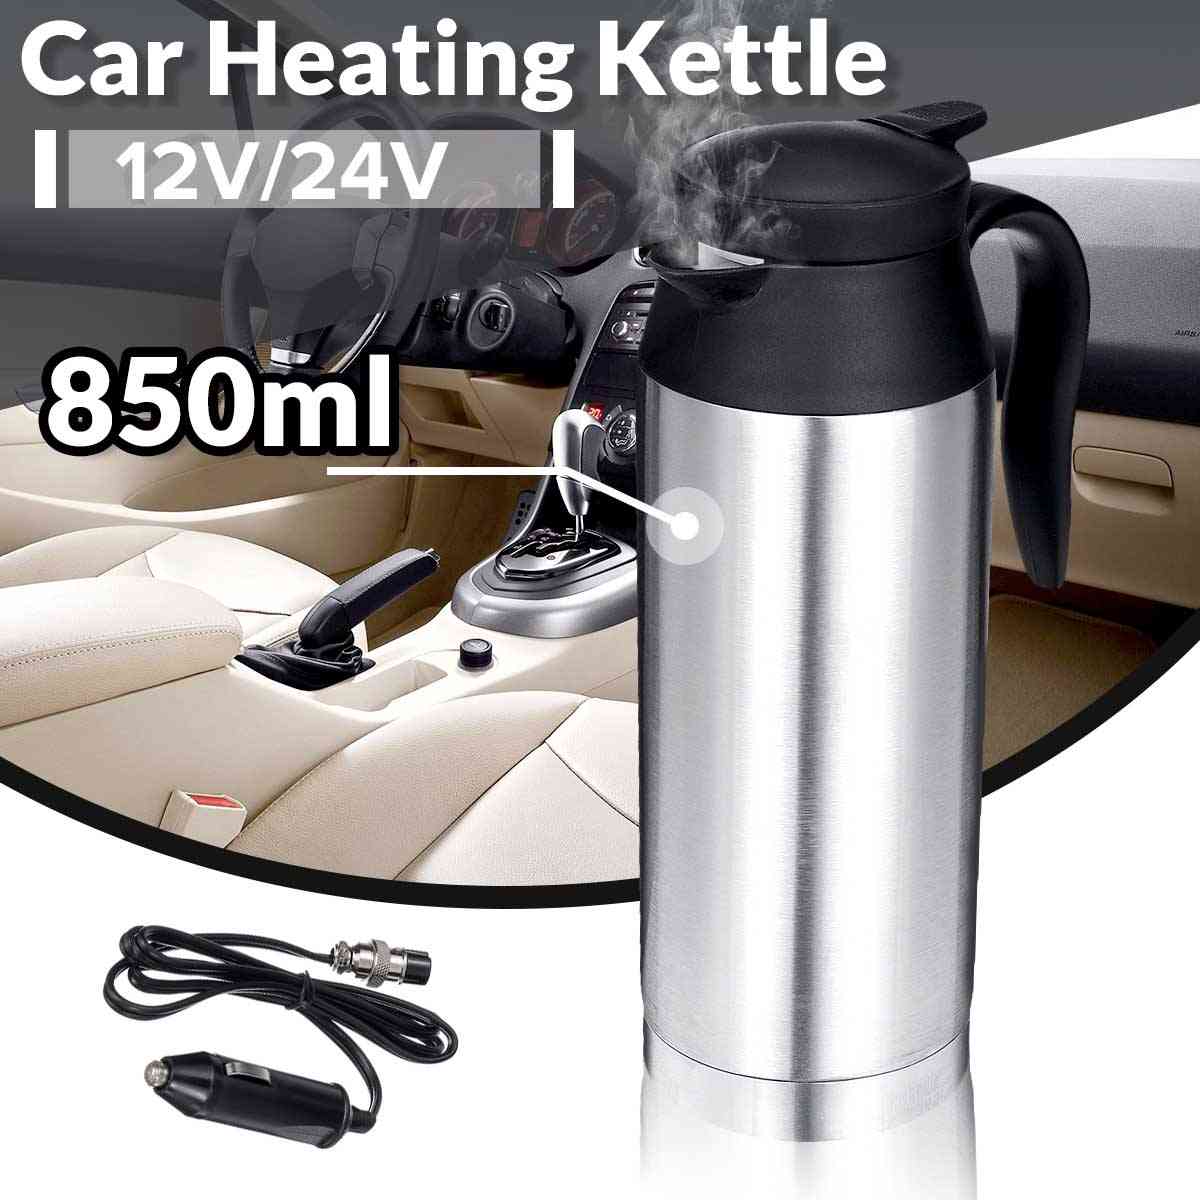 Stainless Steel Electric Kettle, In-car Travel Trip Coffee Tea Heated Mug